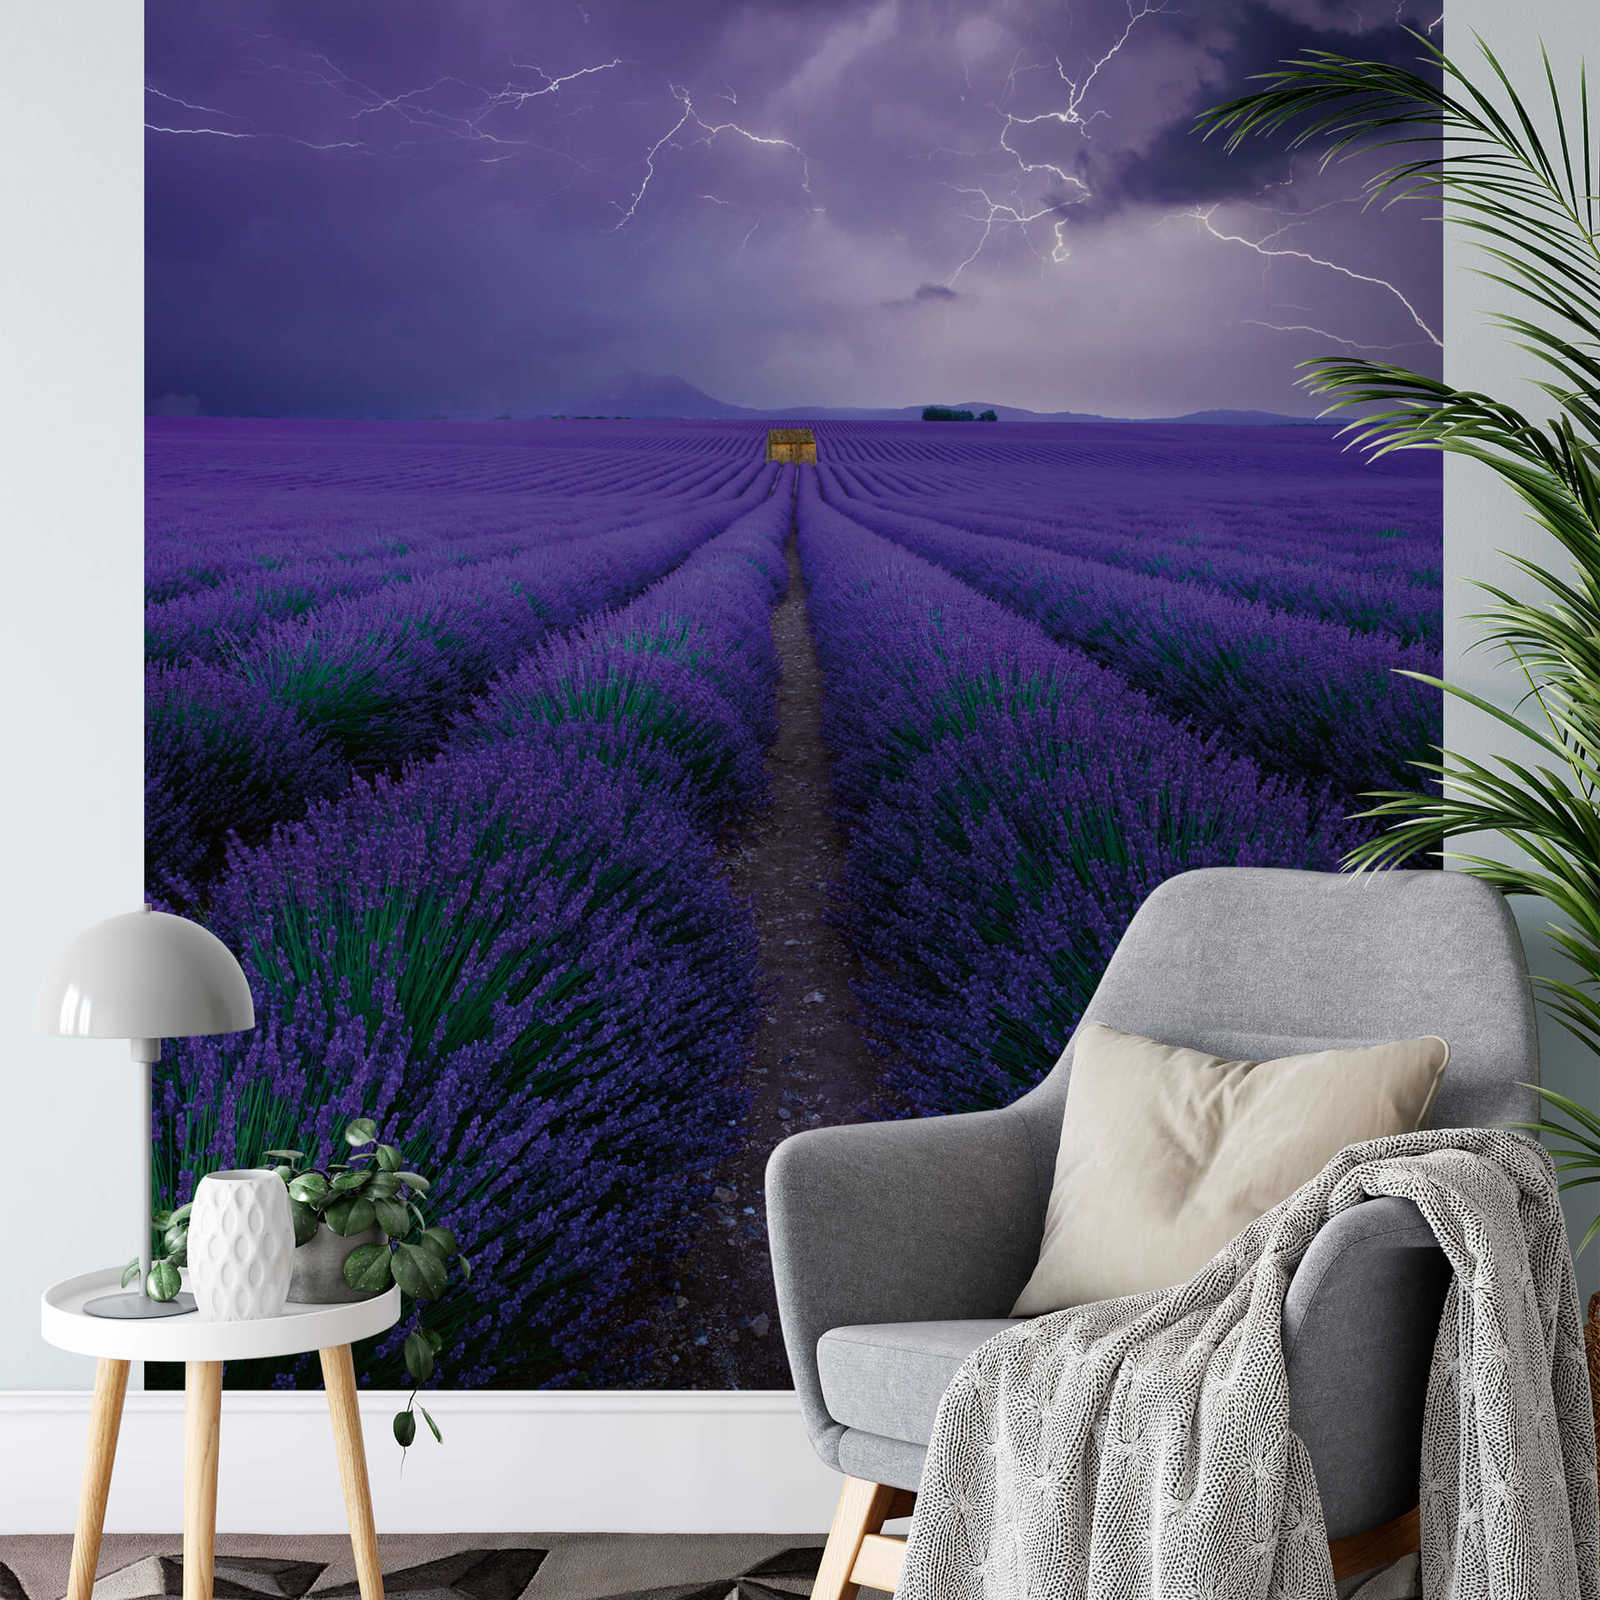             Fototapete Feld mit Lavendel – Violett, Grün, Braun
        